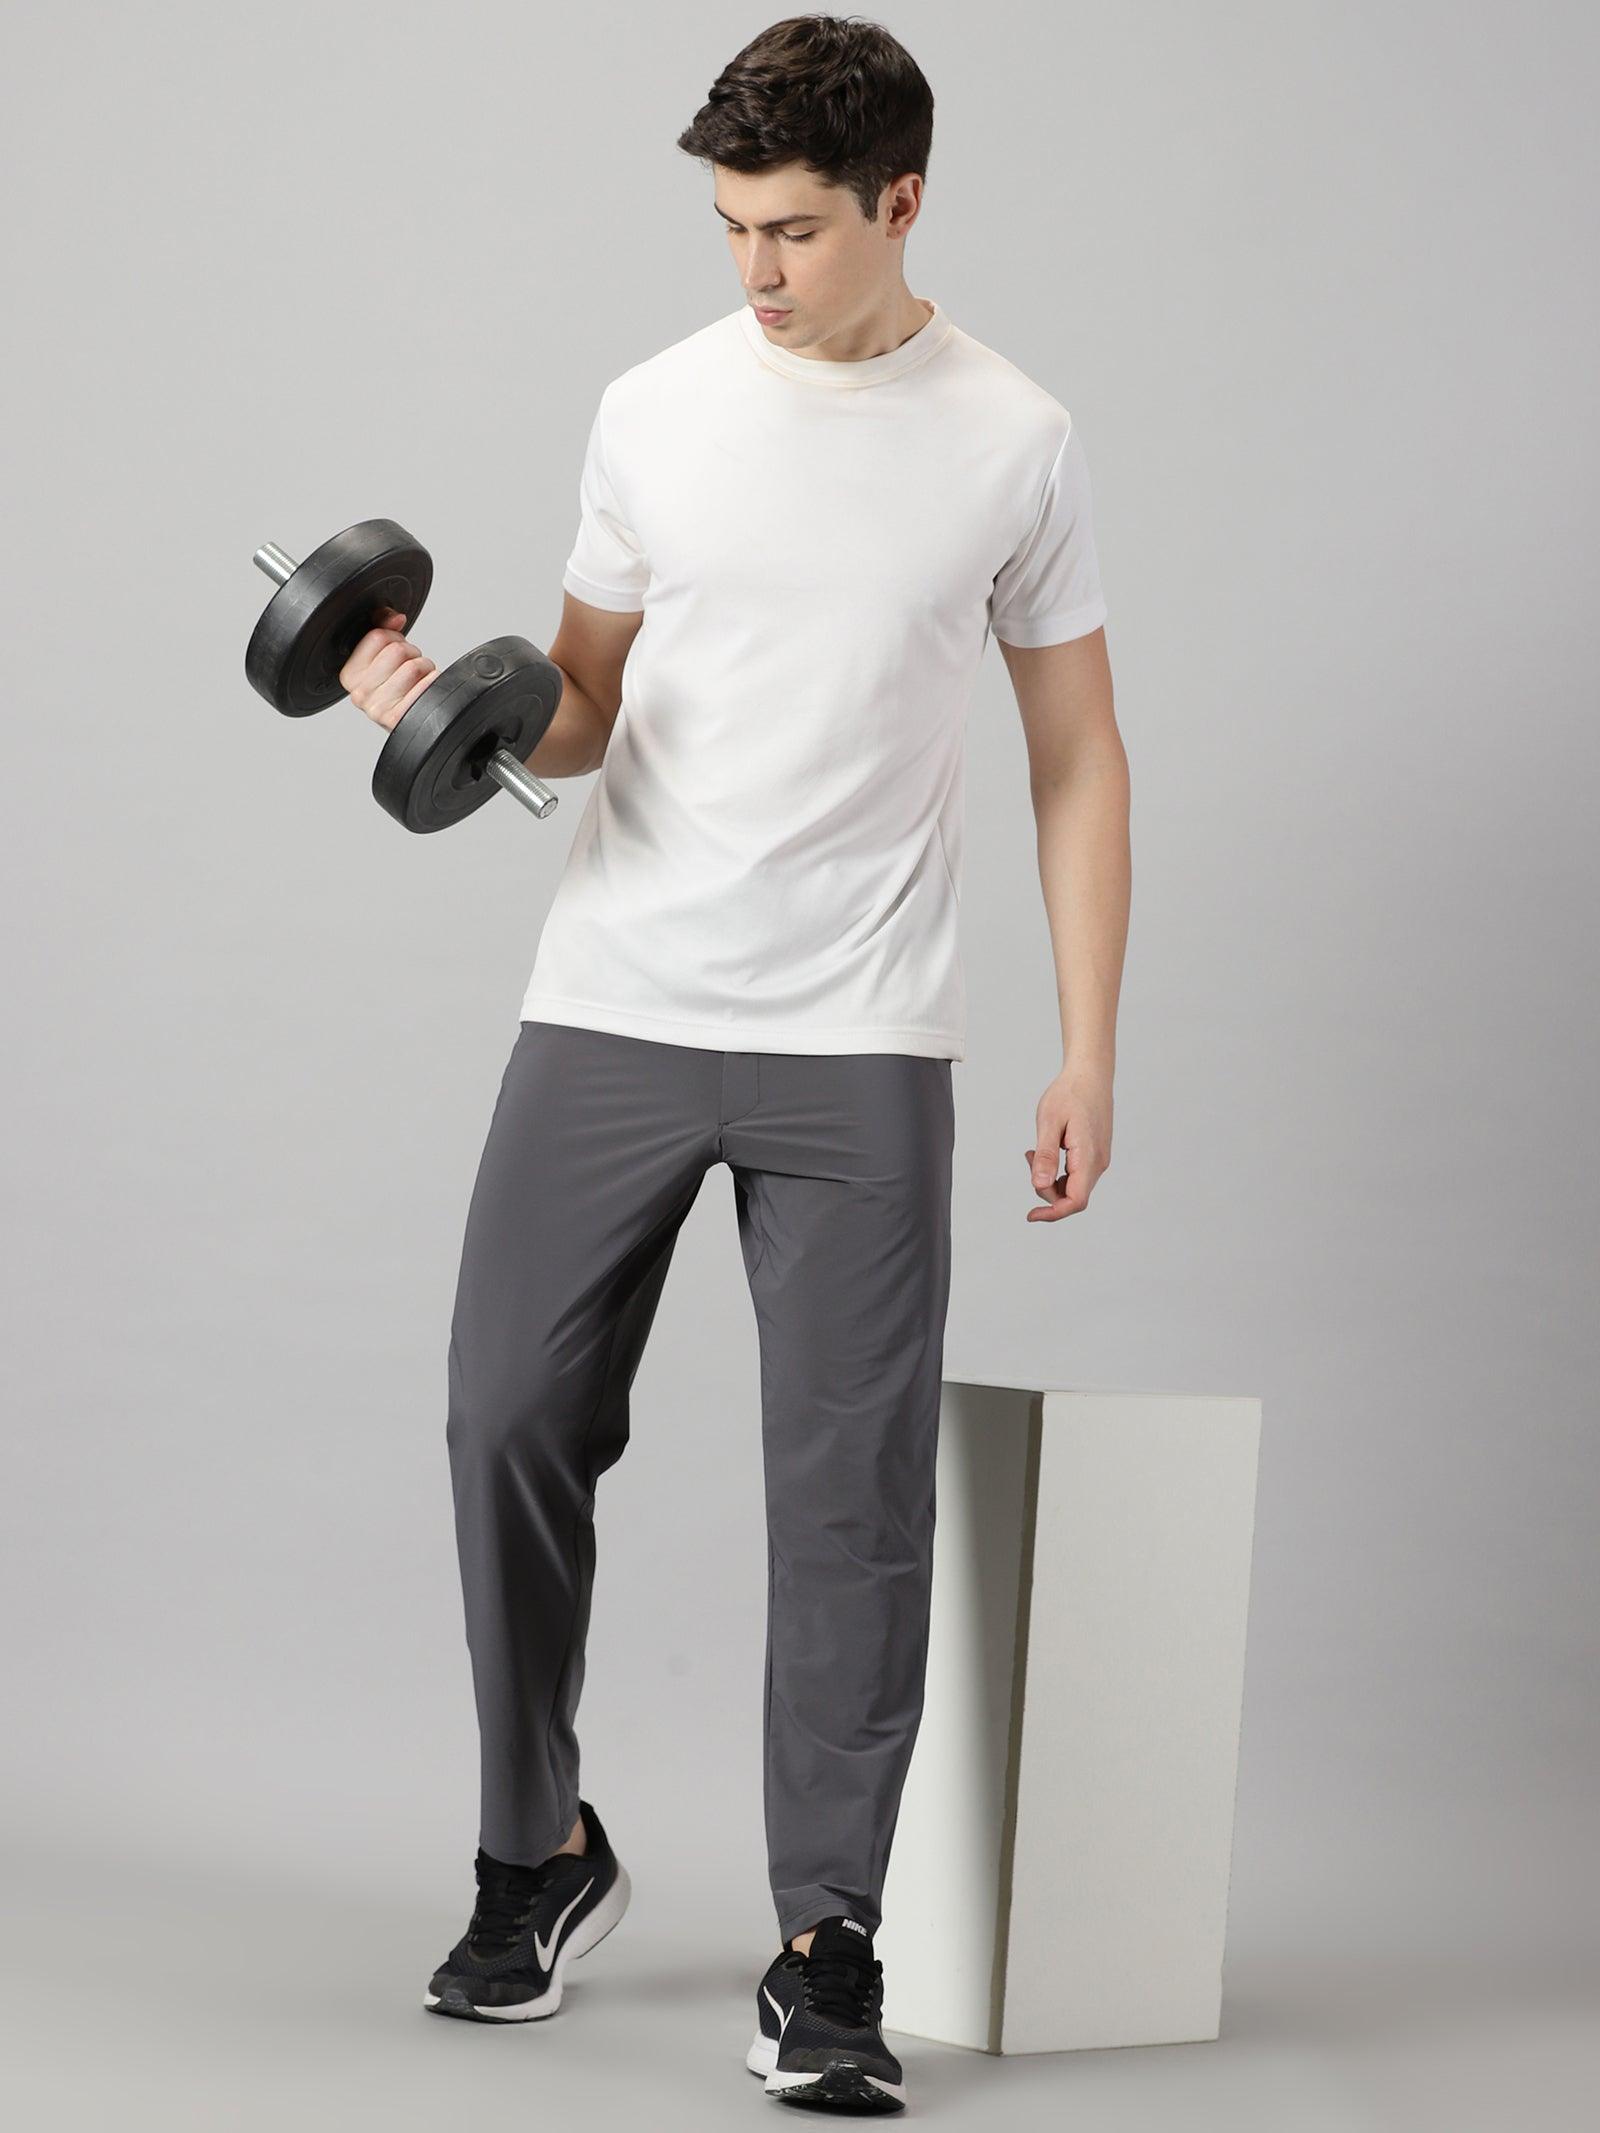 CAICJ98 Sweatpants For Men Men's Gym Jogger Pants Casual Workout Track Pants  Running Sweatpants with Zipper Pockets Black,XXL - Walmart.com